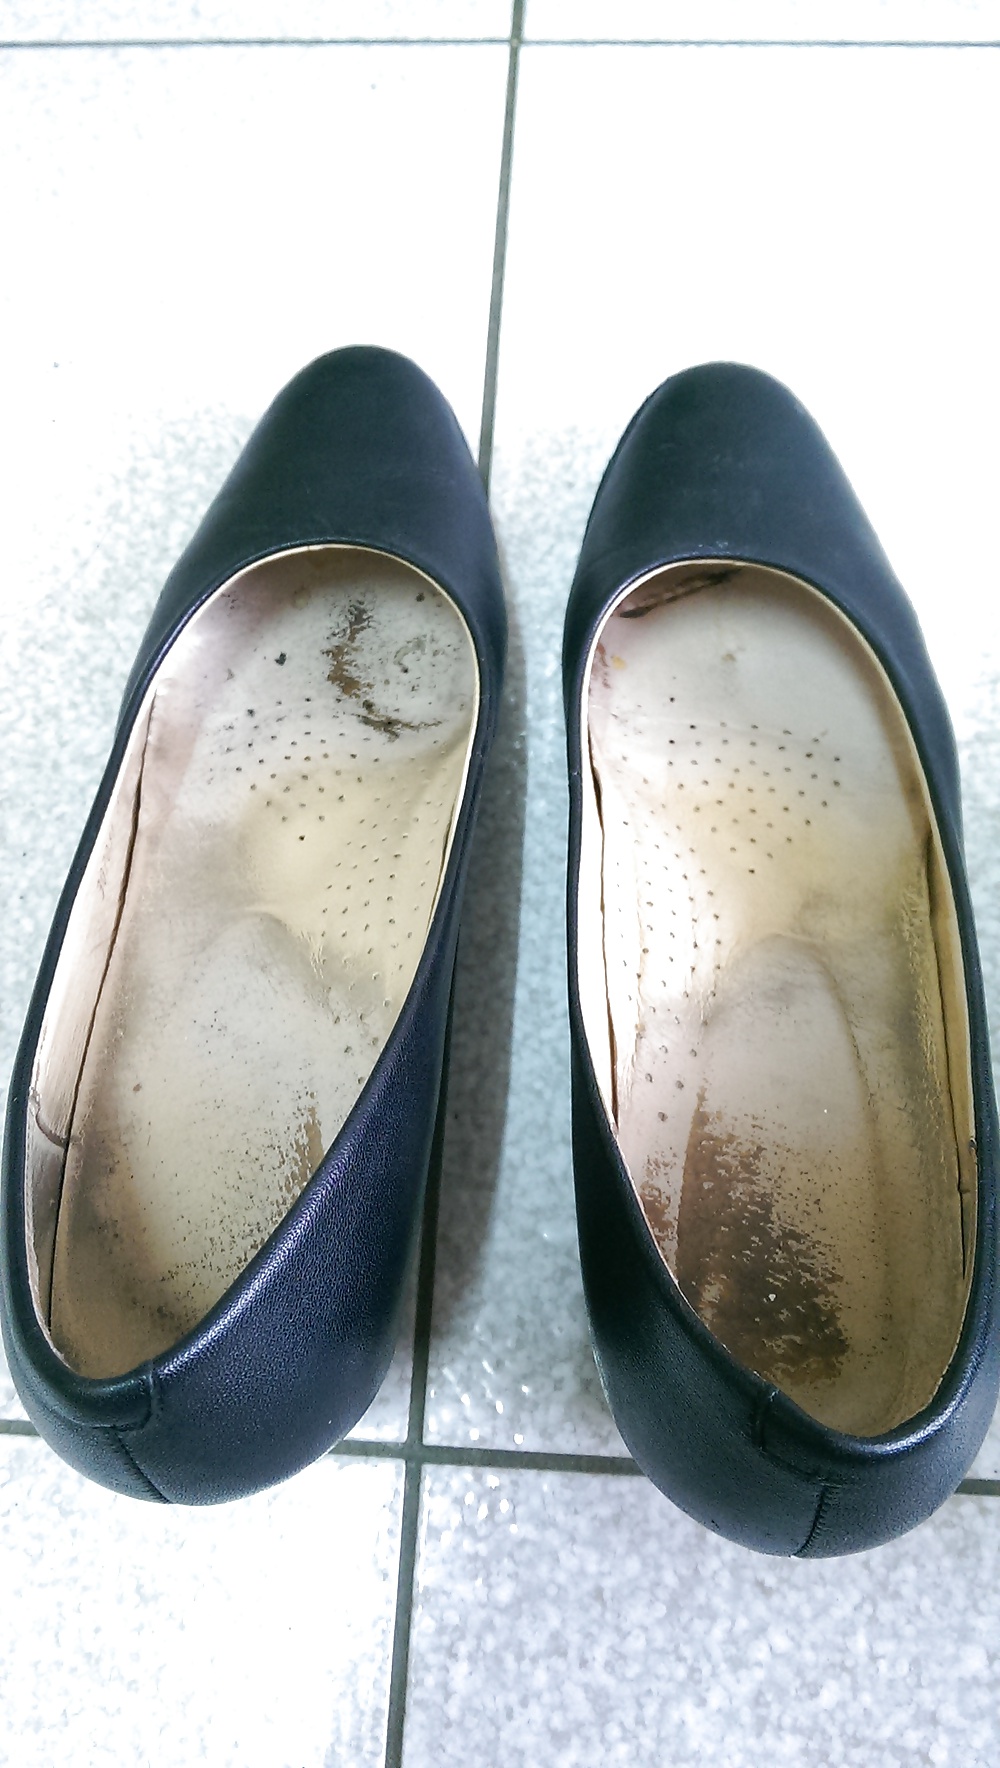 Borrowed heel and ballerina from my colleague #34561217